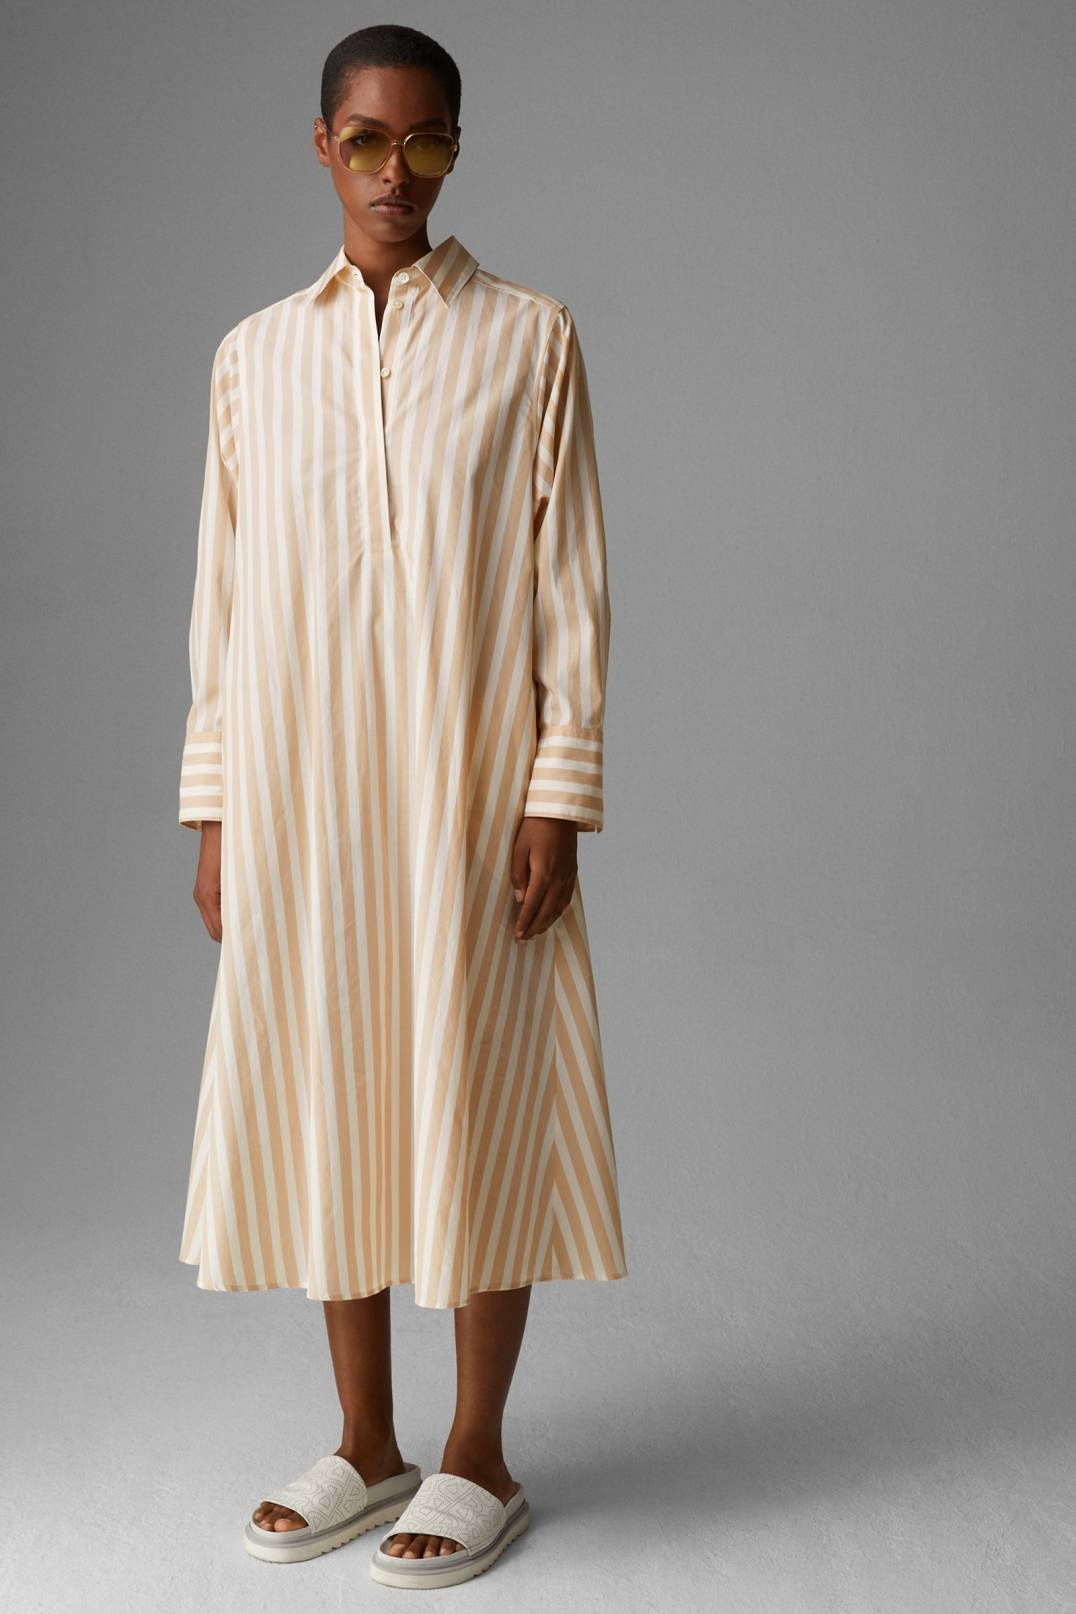 LIA SHIRT DRESS IN BEIGE/OFF-WHITE - 2